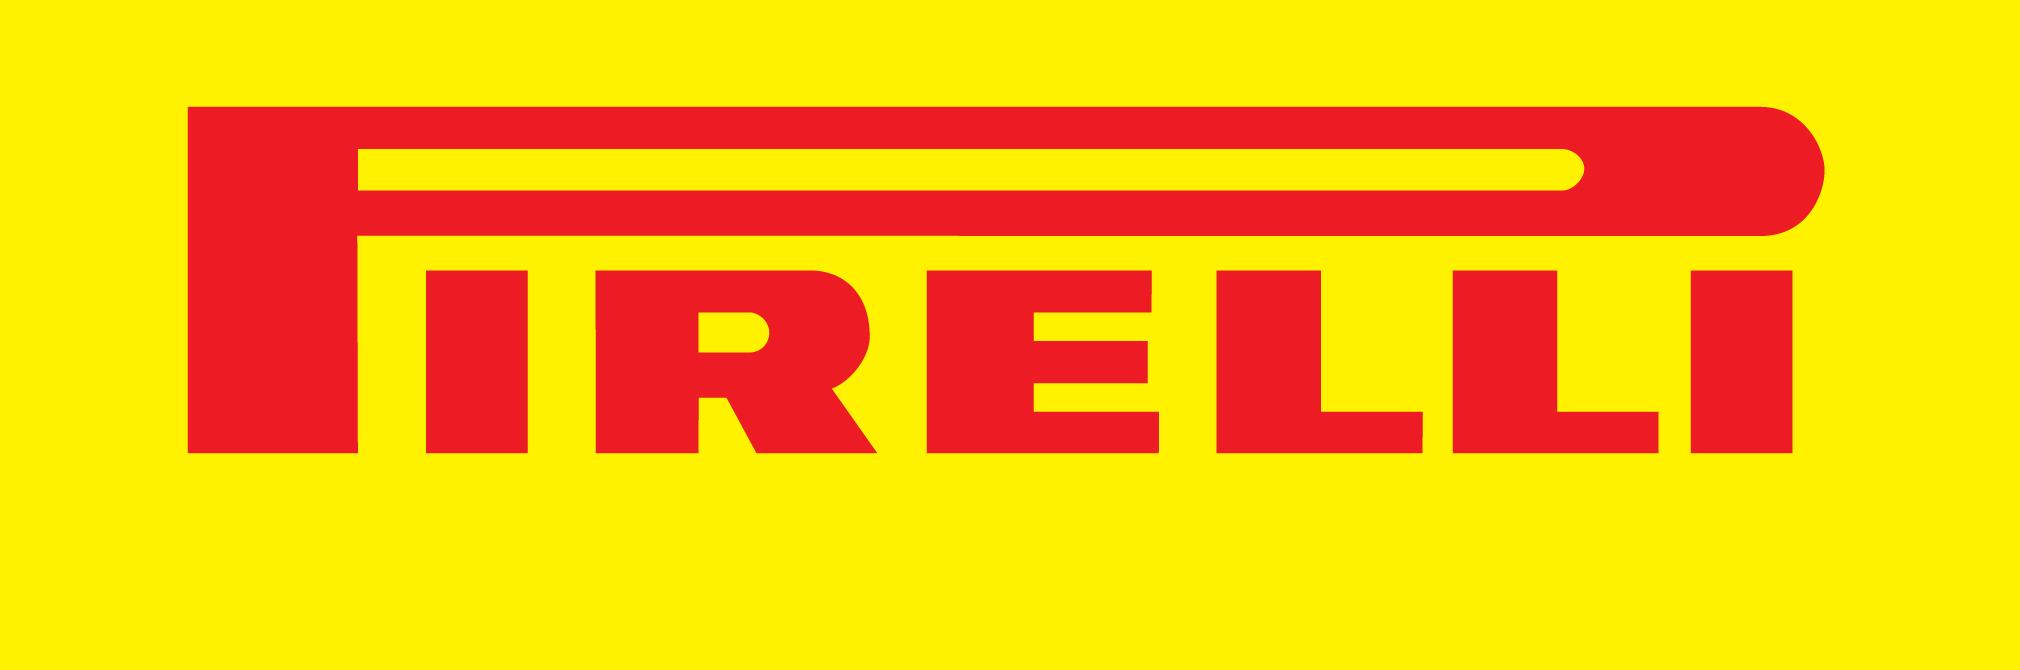 9. Pirelli